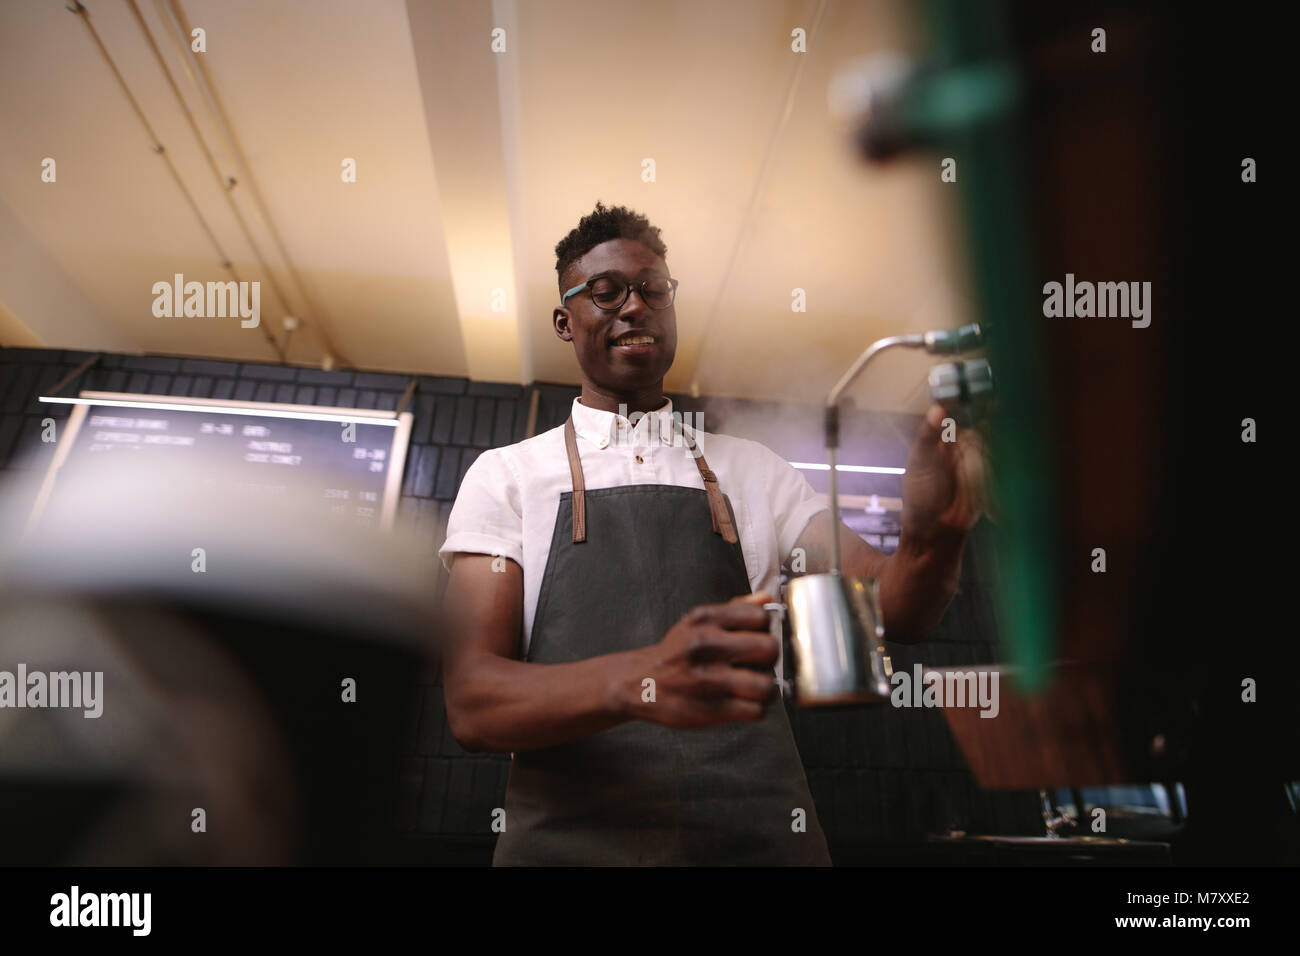 Coffee shop owner preparing coffee on steam espresso coffee machine. Man working in his coffee shop wearing an apron. Stock Photo